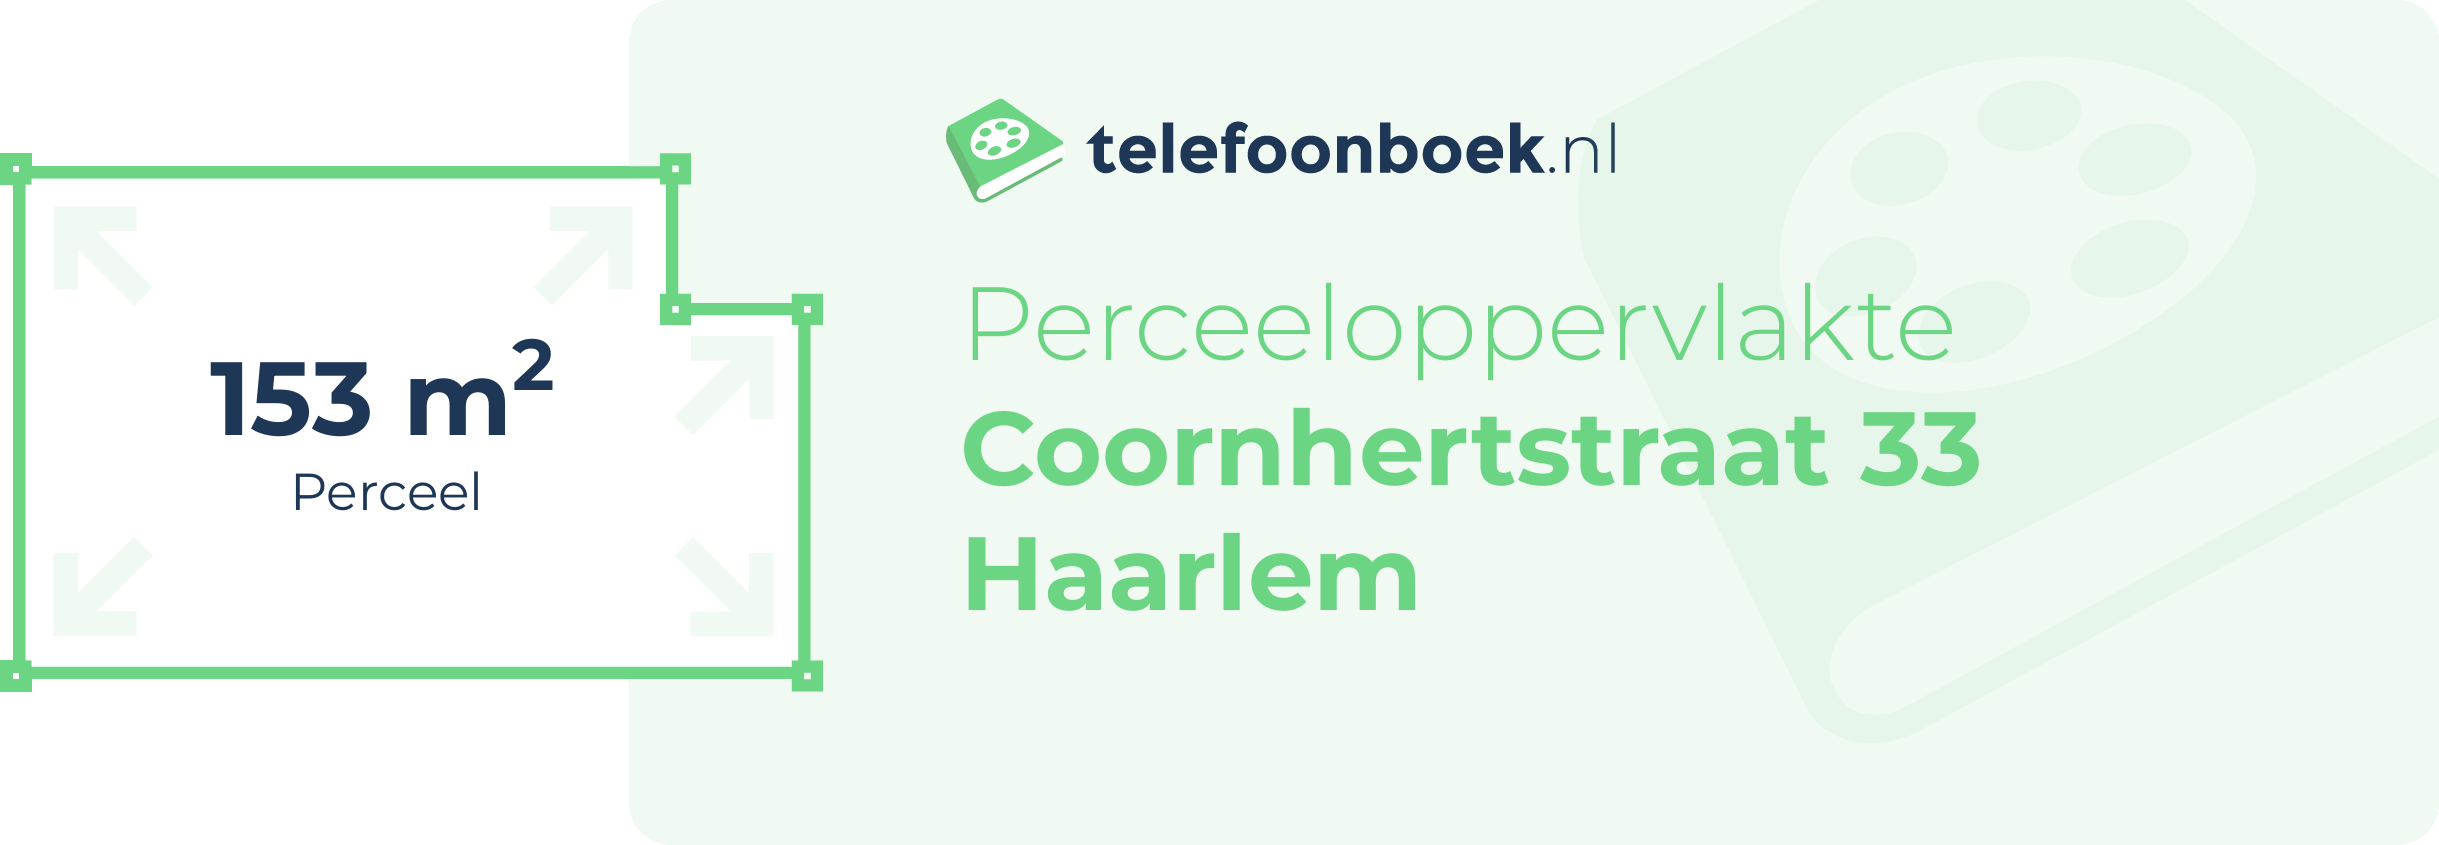 Perceeloppervlakte Coornhertstraat 33 Haarlem